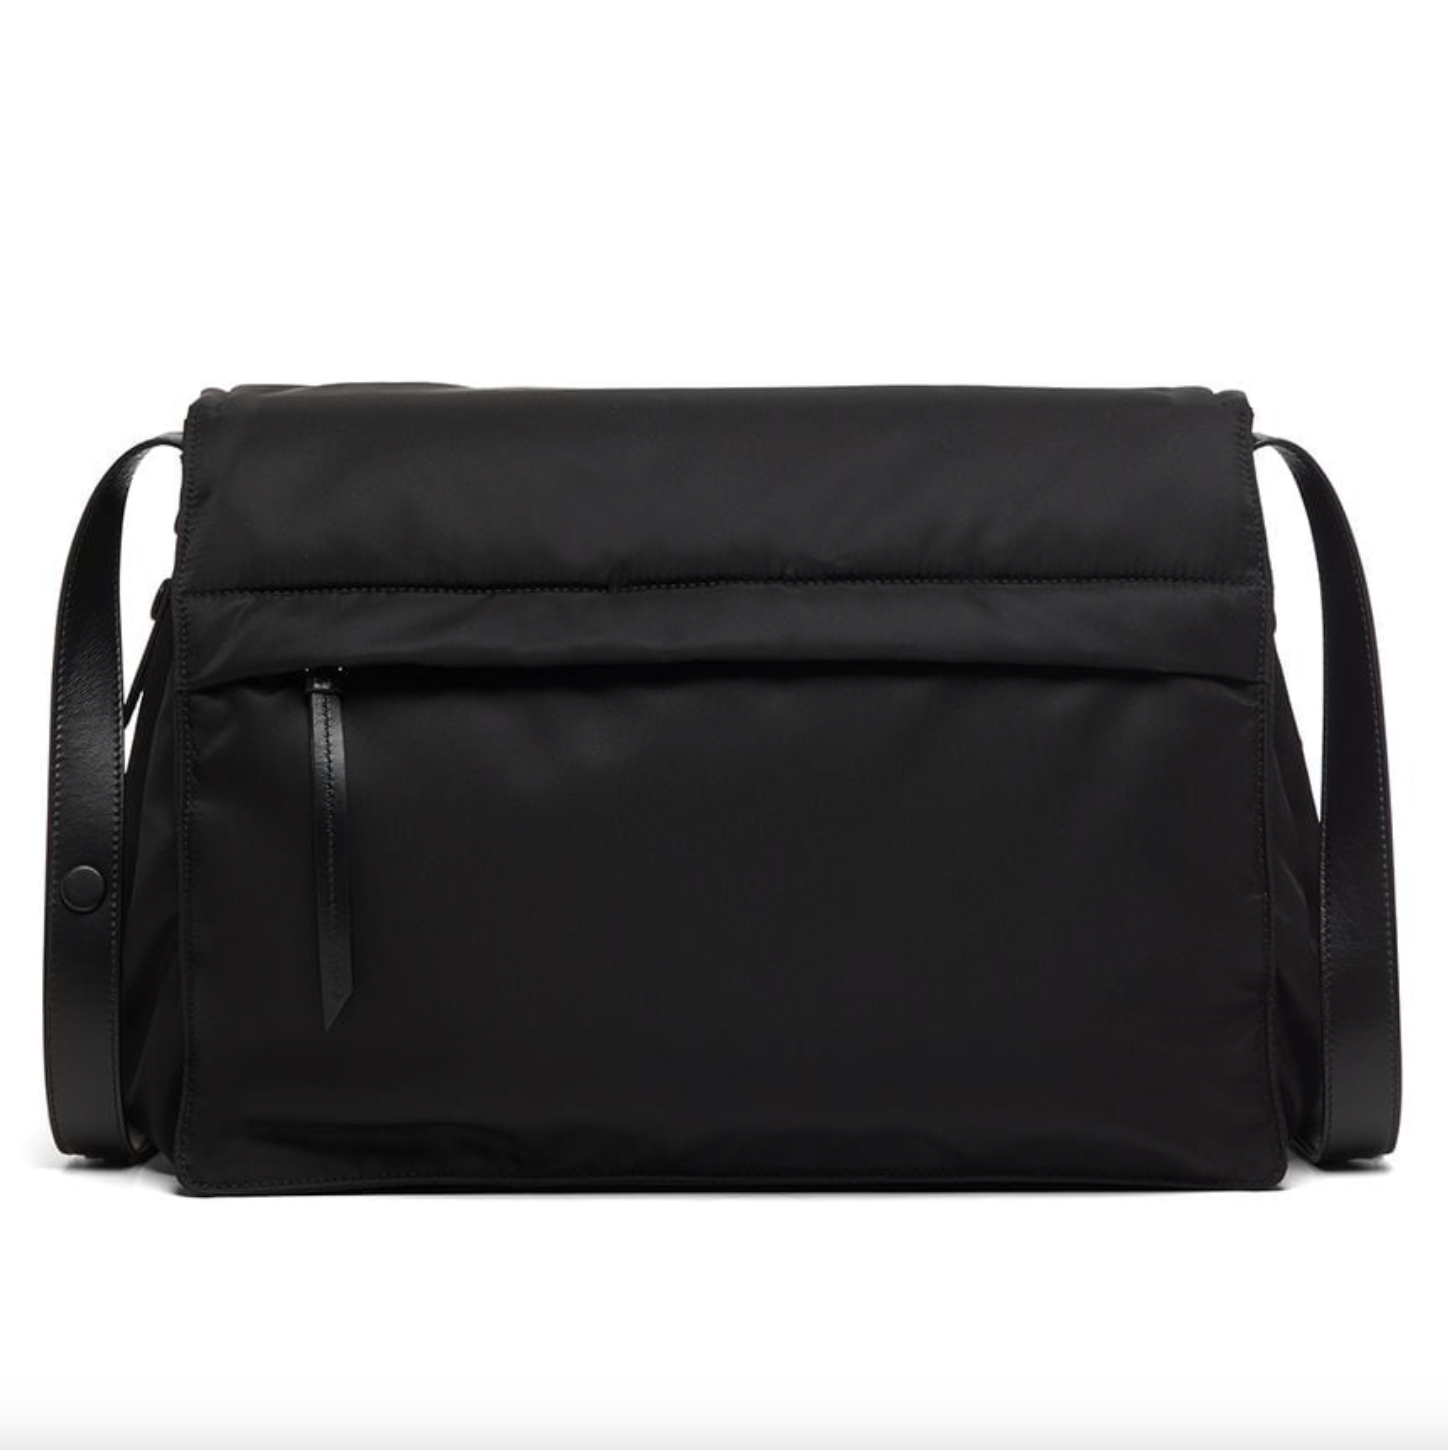 Re-Nylon Medium Padded Tote Bag, Black, One Size